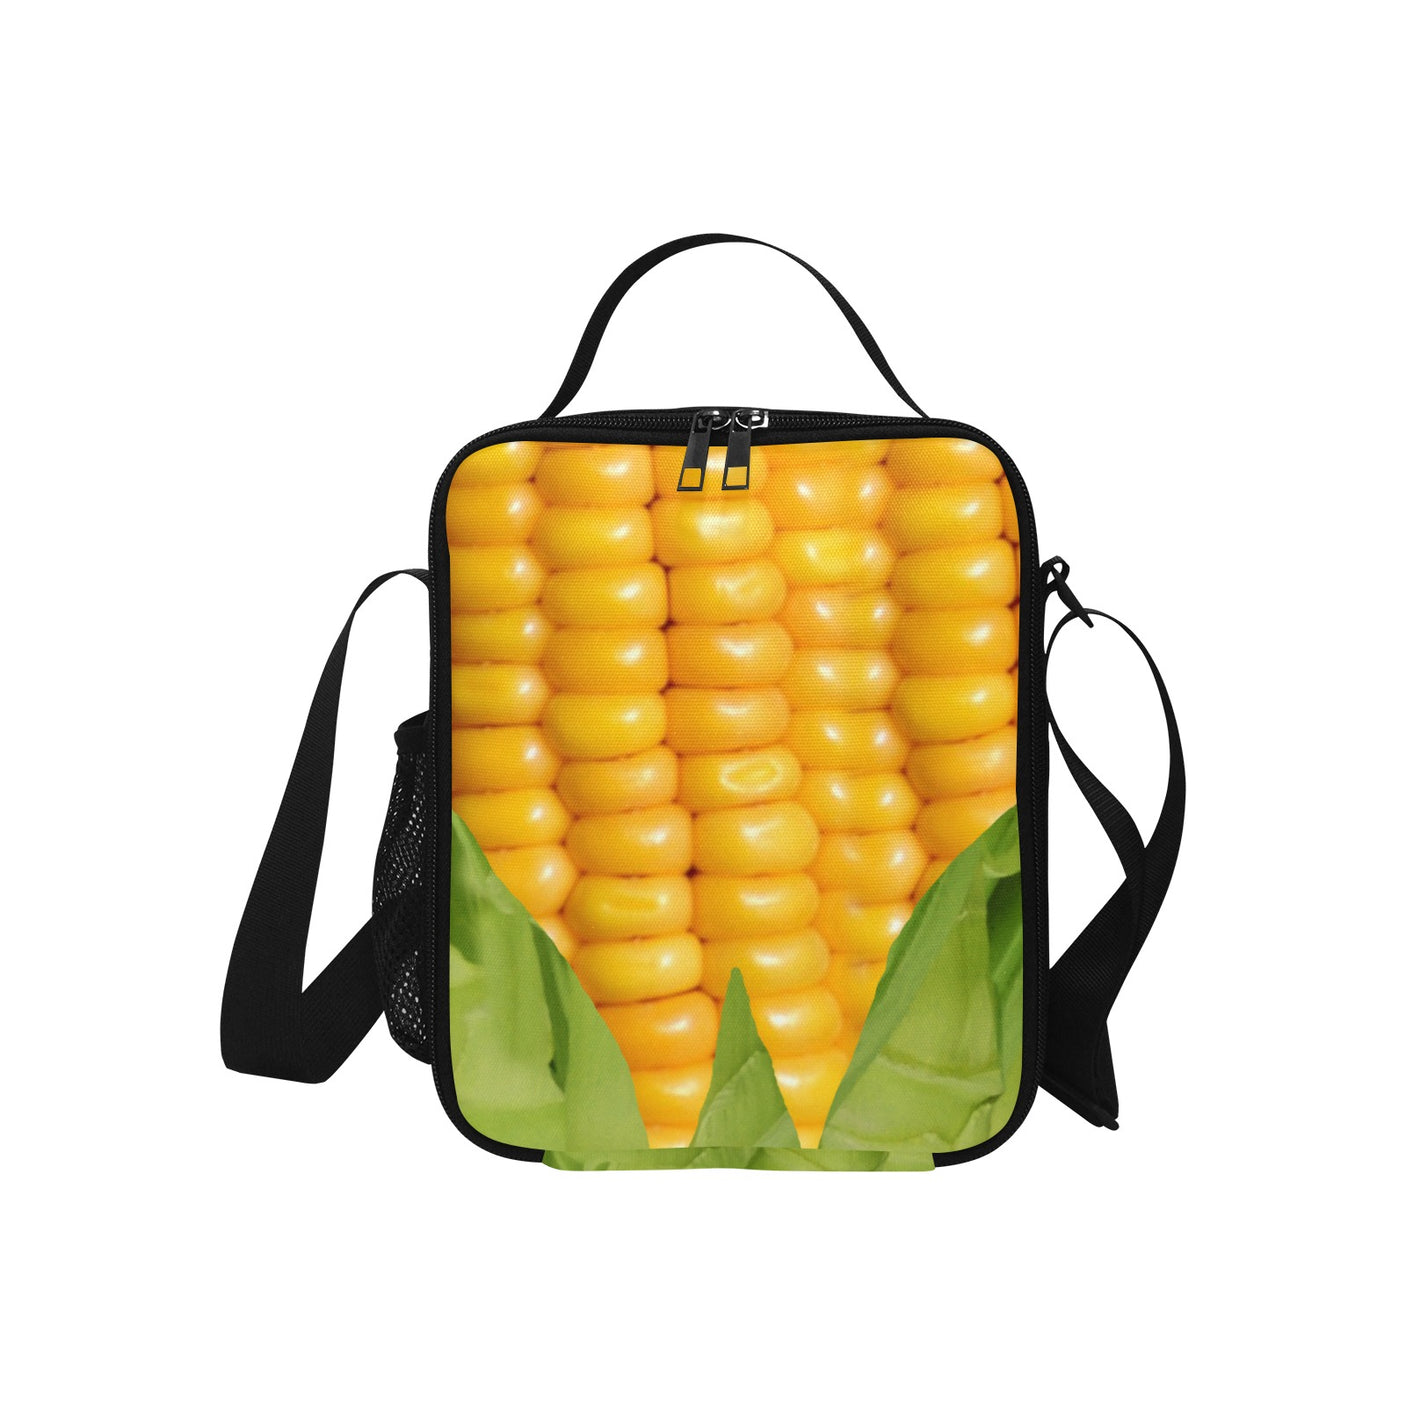 Corn Cob Lunch Box Bag